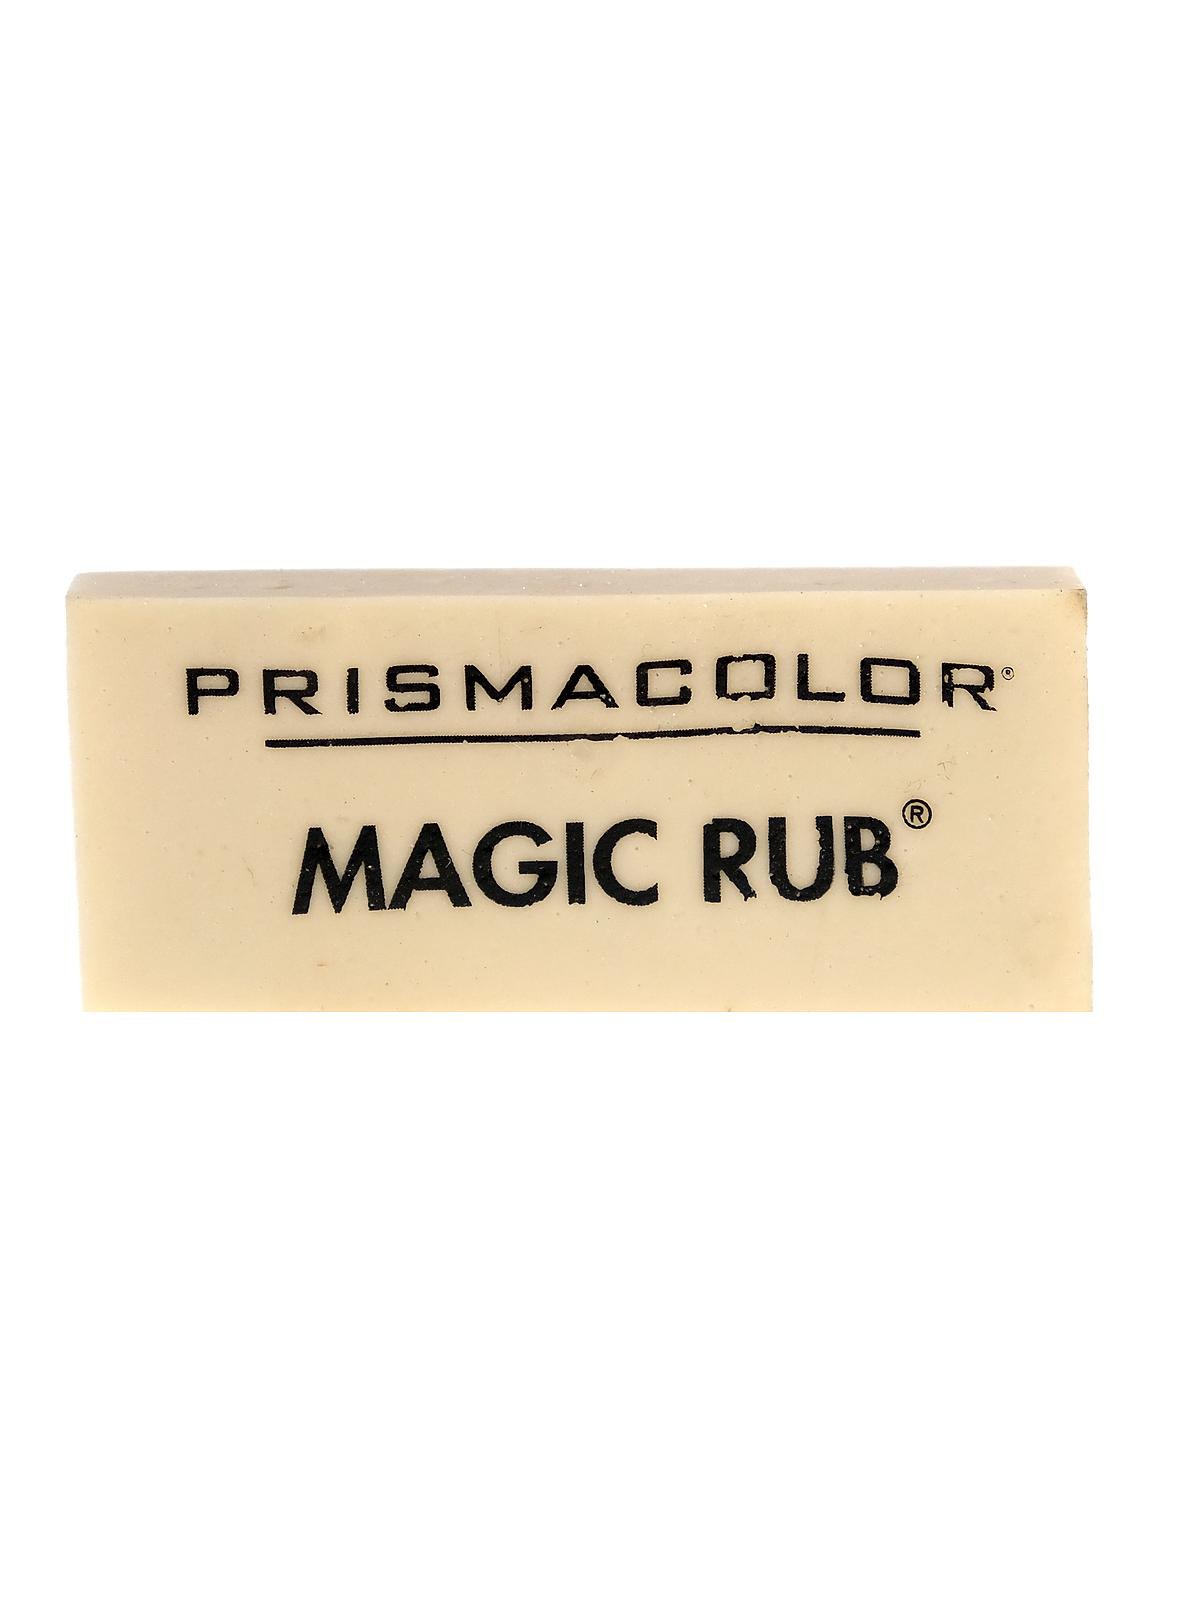 SAN73201 - Prismacolor Magic Rub Art Eraser